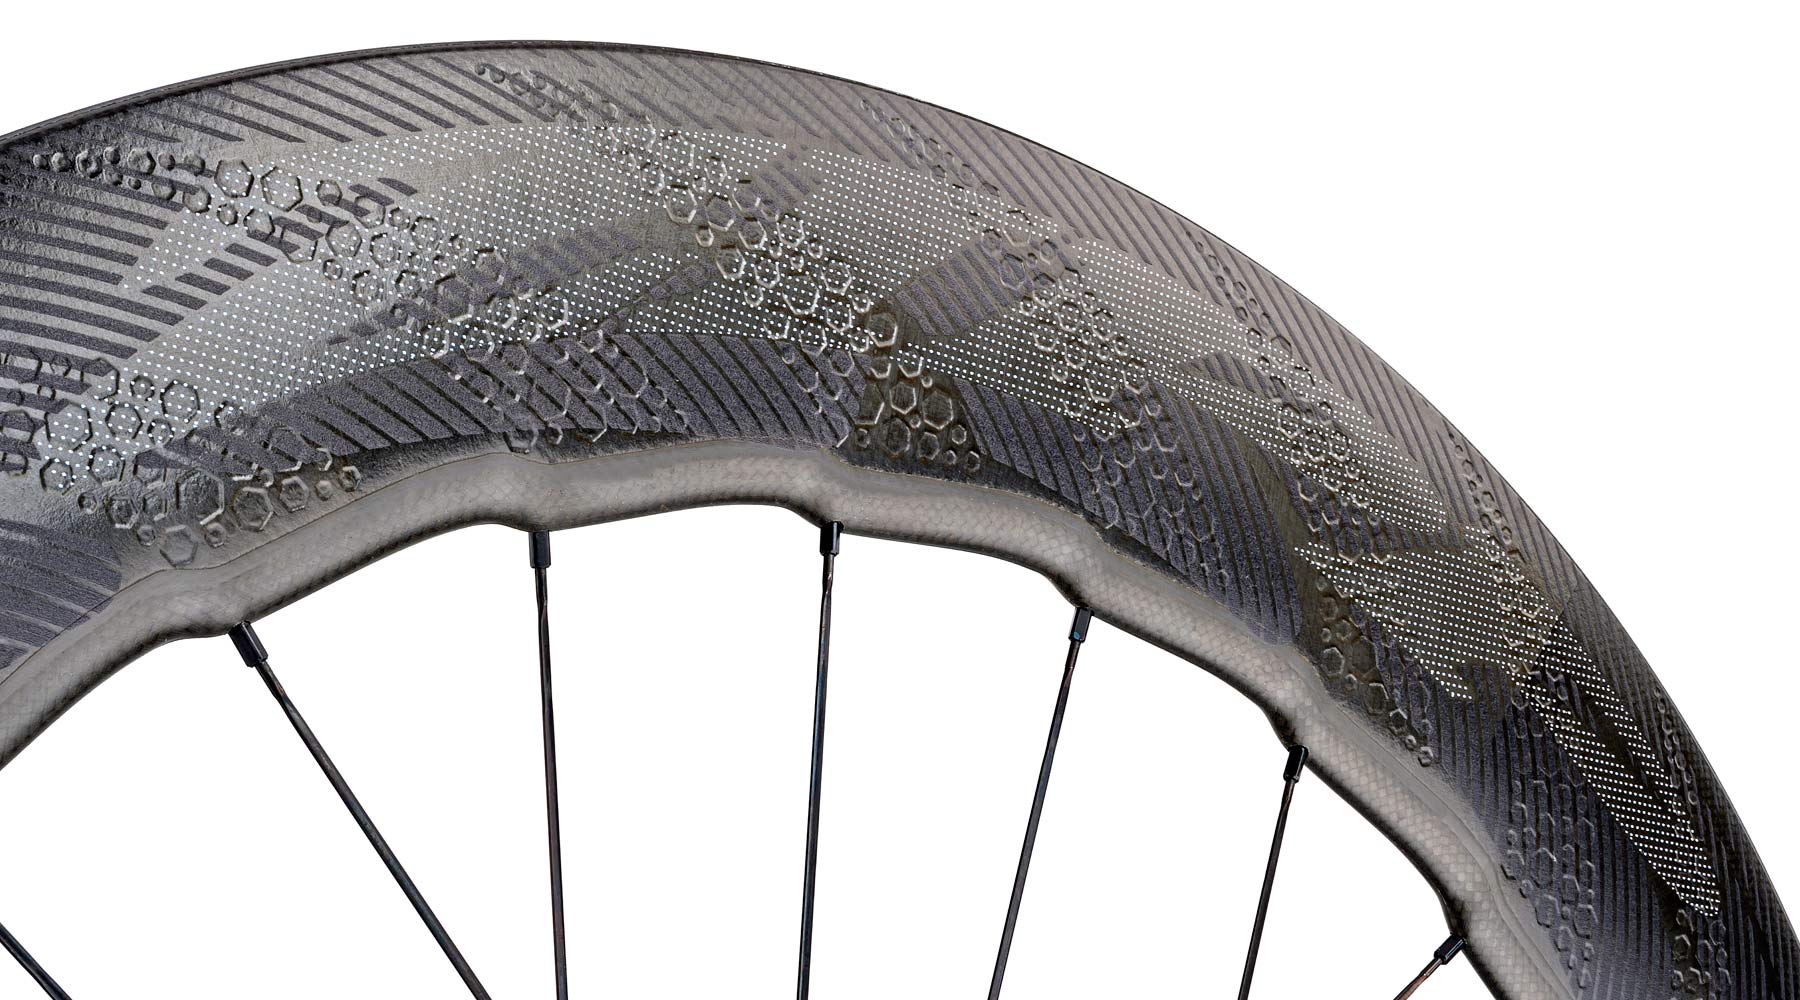 Zipp 858 NSW aero deep section carbon clincher road bike race wheels disc brake ABLC dimples